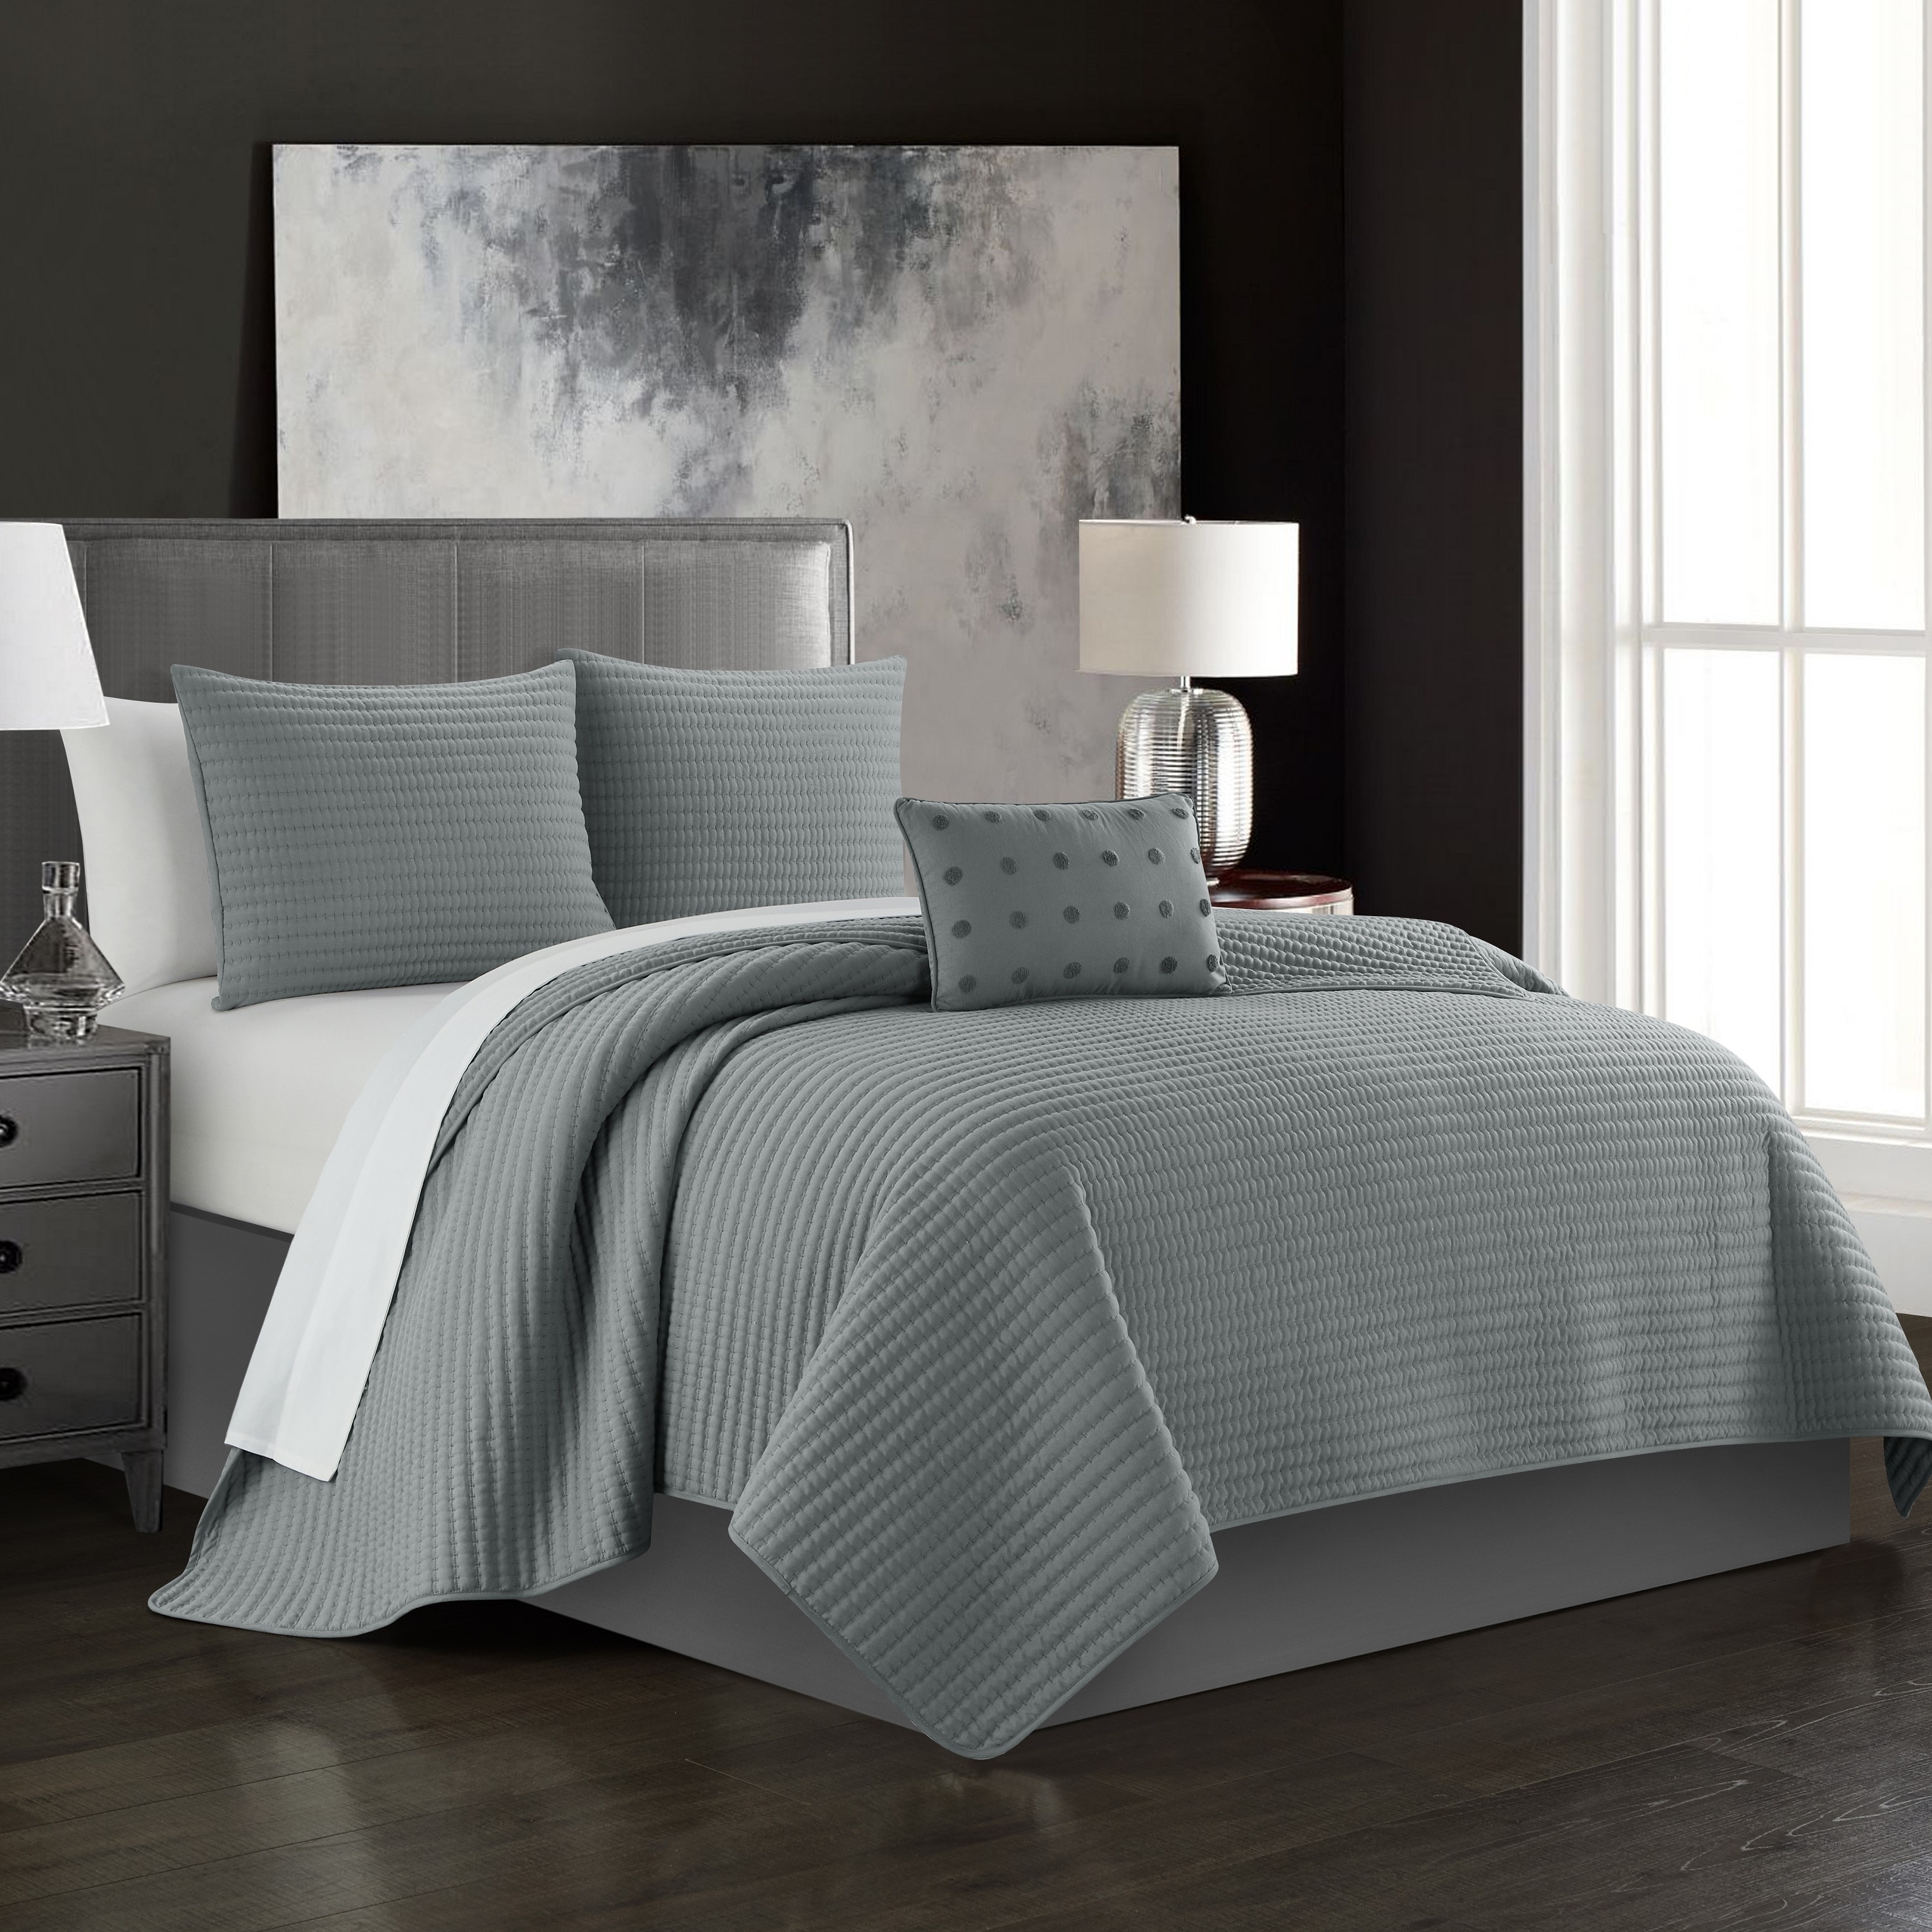 Hayden 4 Piece Quilt Set Striped Box Stitched Design Bedding - Decorative Pillow Shams Included - Beige, King